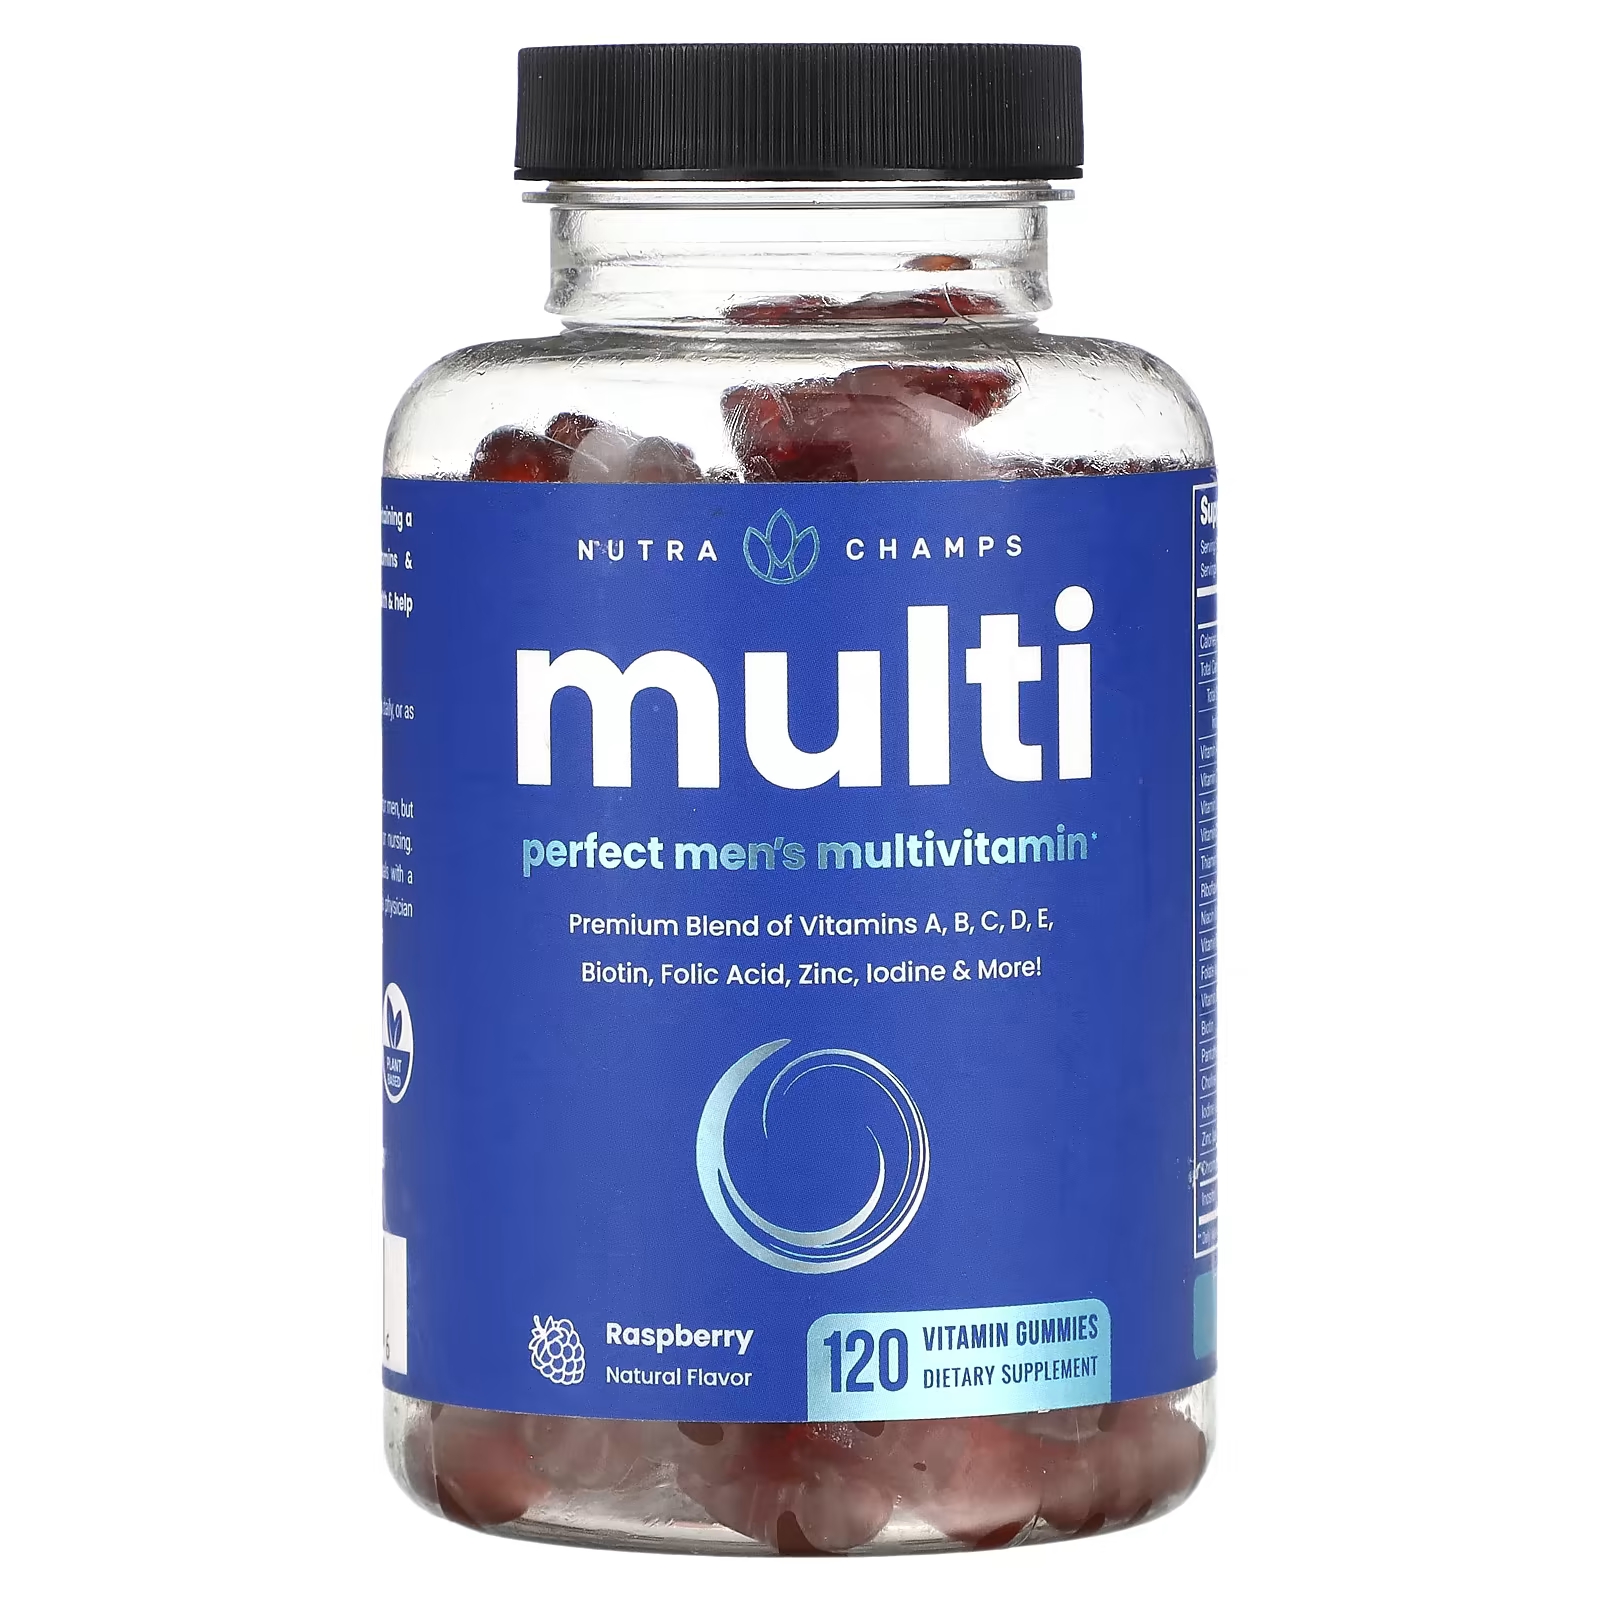 Мультивитамины NutraChamps для мужчин со вкусом малины, 120 жевательных таблеток yumv s мультивитамины для взрослых со вкусом малины 60 желейных витаминов